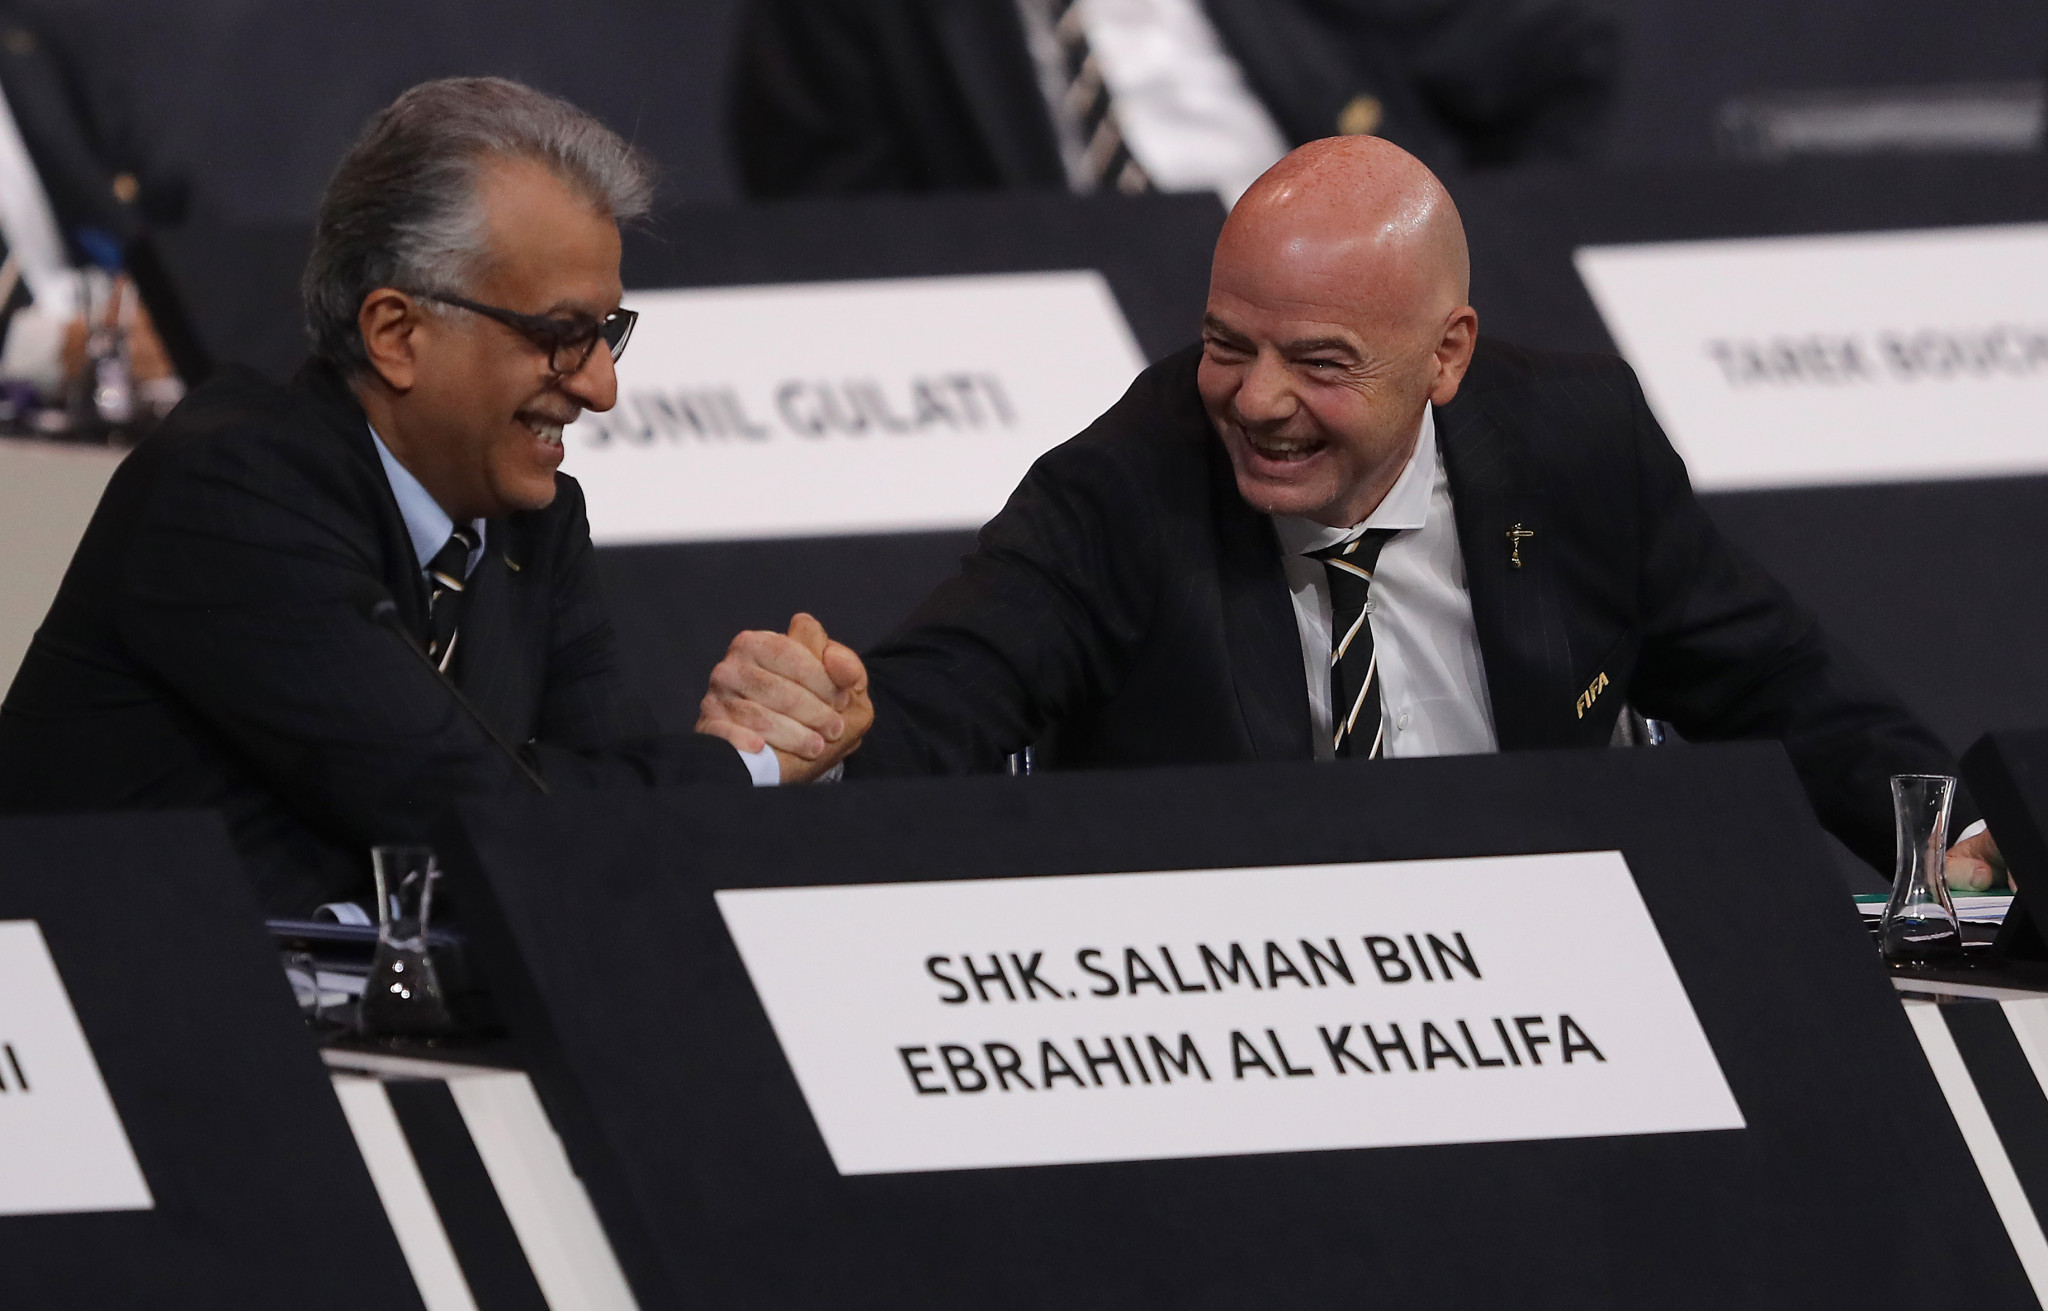 FIFA President Gianni Infantino described Shaikh Salman bin Ebrahim Al Khalifa as "my team-mate" ©Getty Images